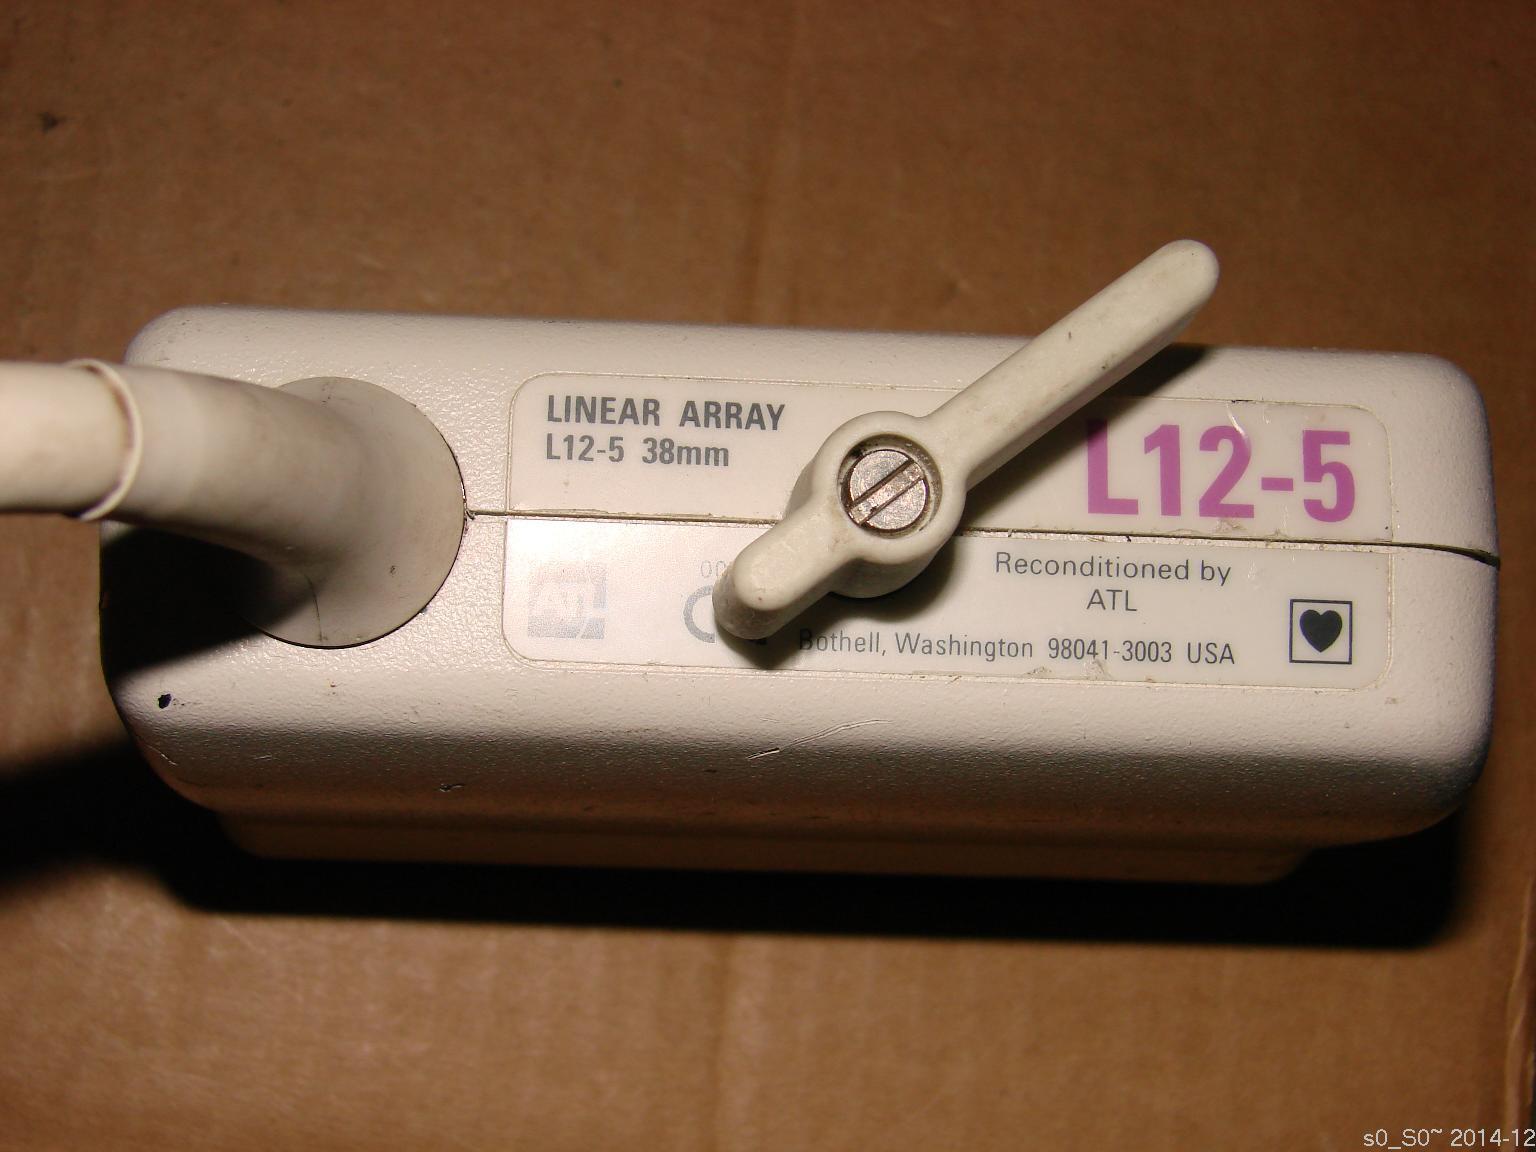 PHILIPS ALT Linear Array L12-4 38mm Vascular Ultrasound Transducer Probe